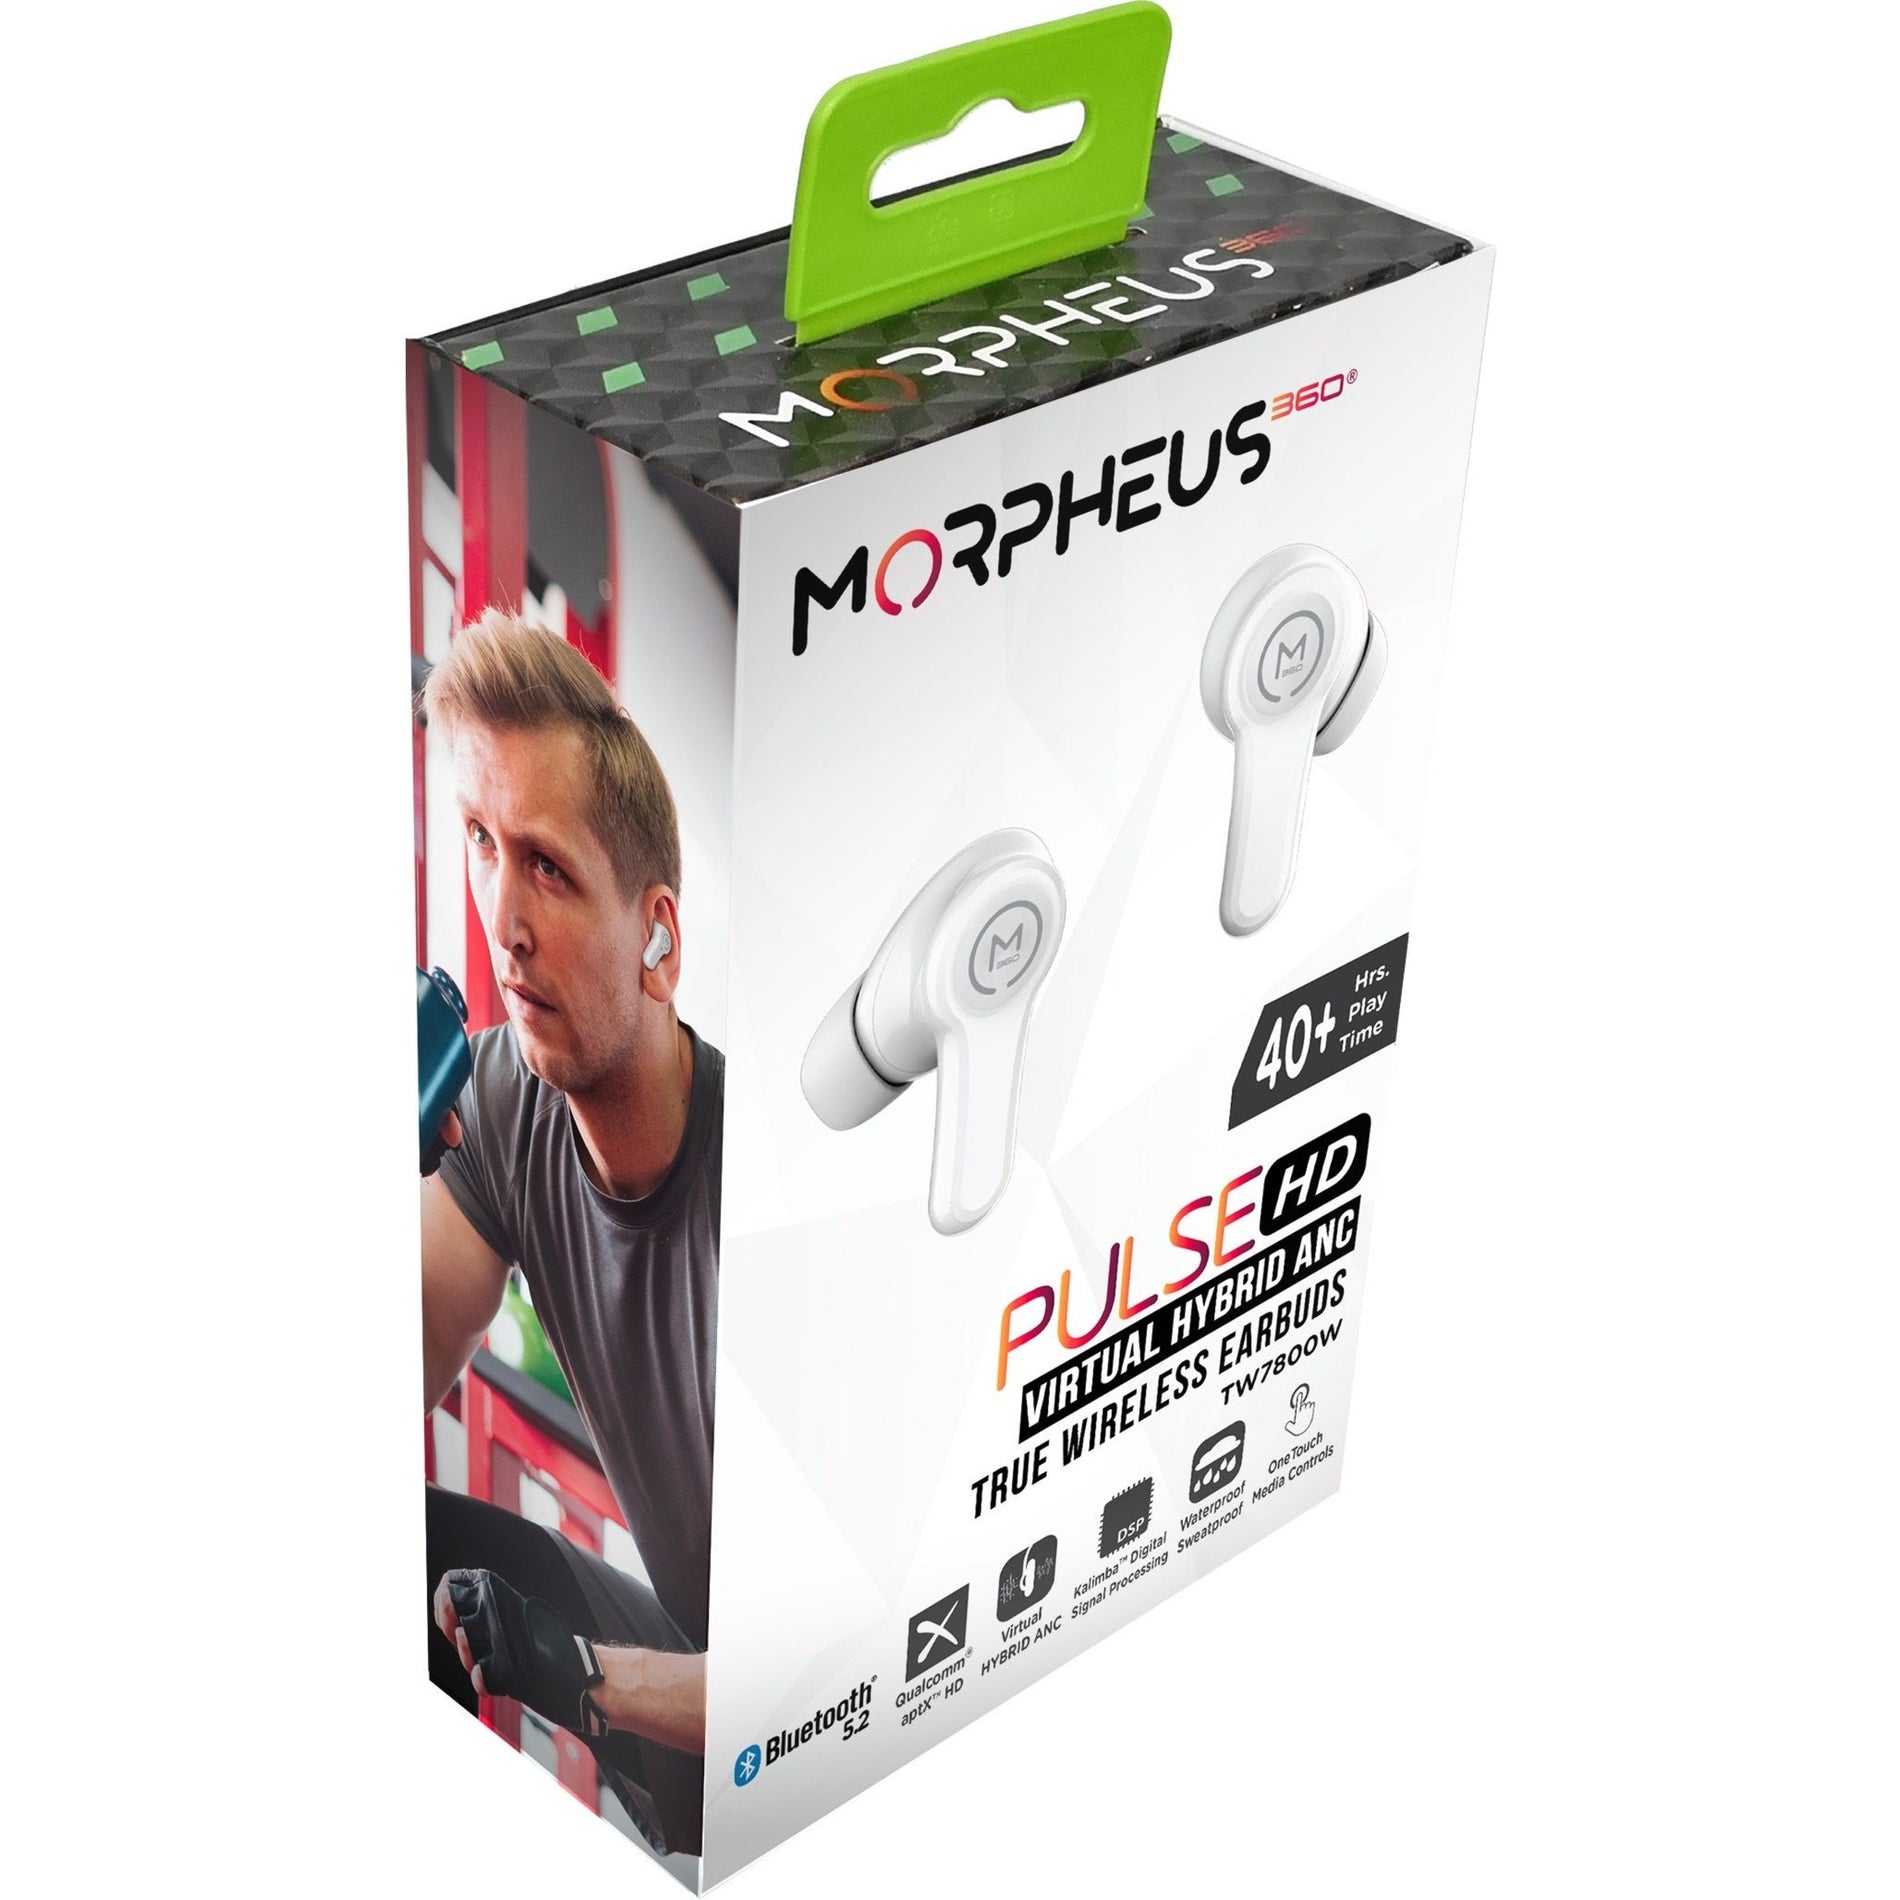 Morpheus 360 TW7800W PUlSE HD Virtual Hybrid ANC True Wireless Earbuds, Bluetooth 5.2, White